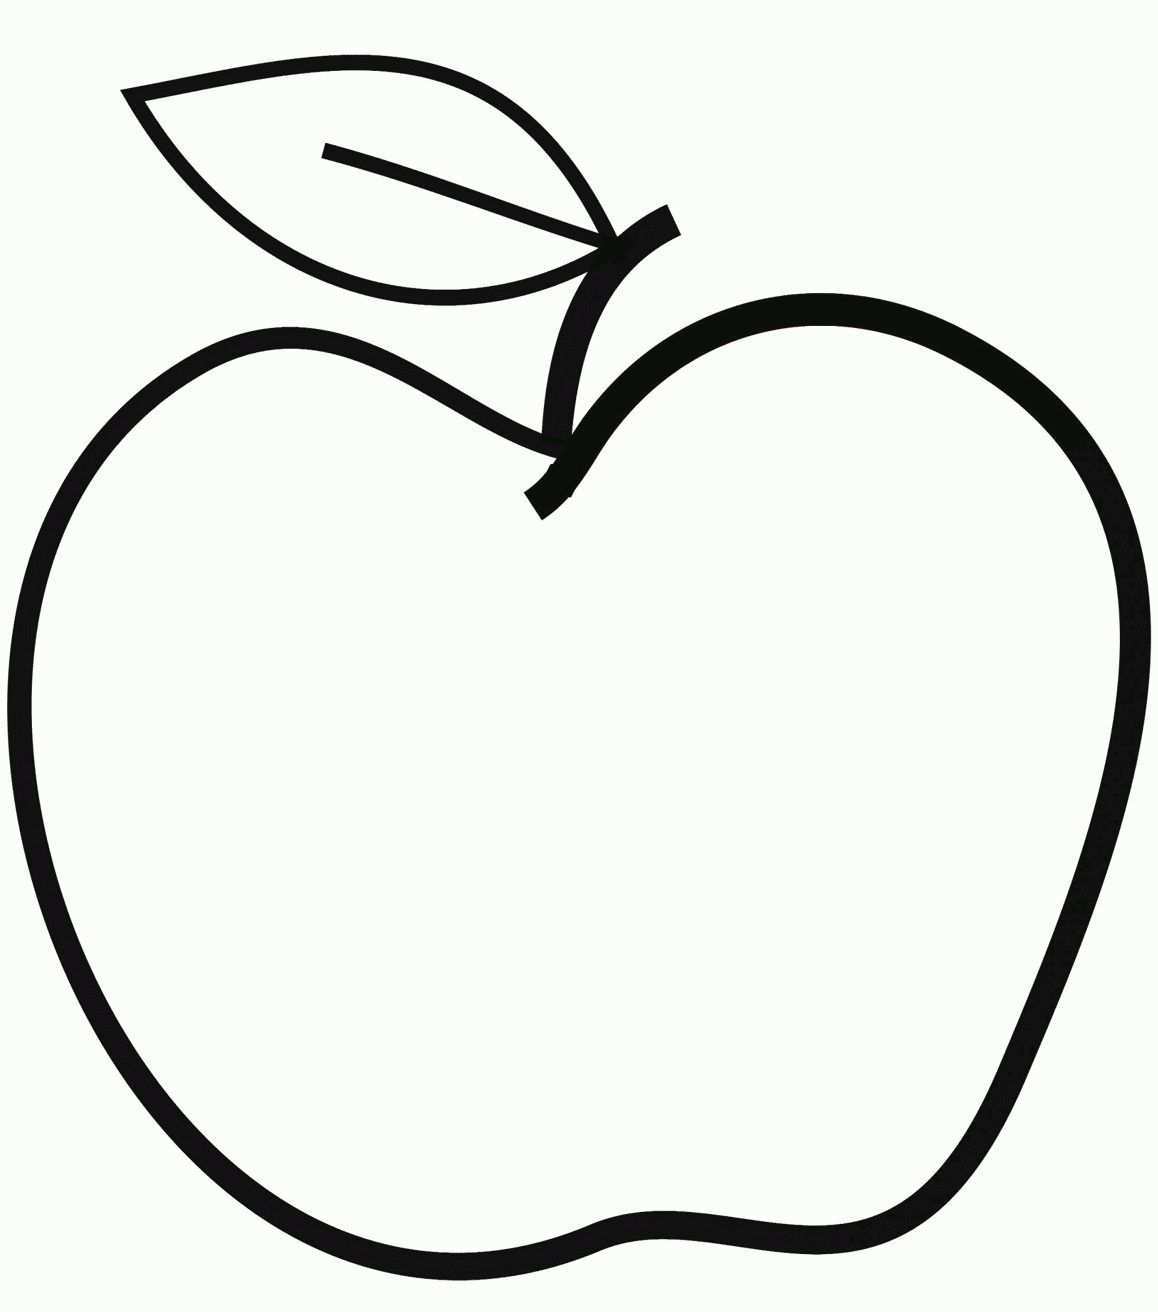 Apfel Bilder Zum Ausdrucken 2938492384234 E1537938370183 Apfel Apple Bilder Color Coloring Bilder Zum Ausdrucken Schablonen Zum Ausdrucken Apfel Bilder